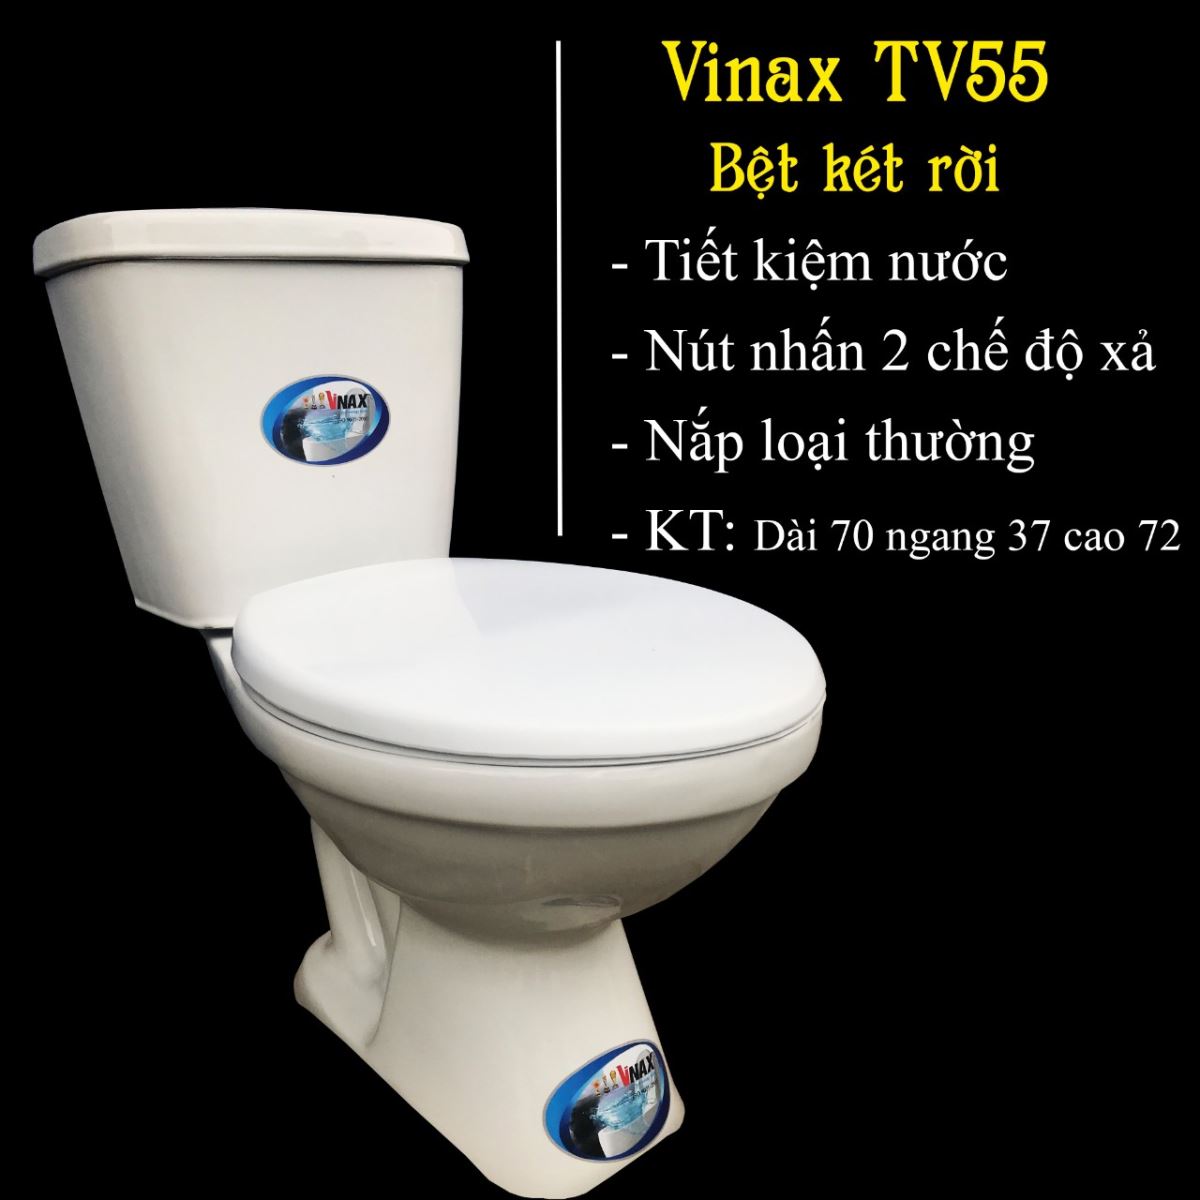 Bệt két rời Vinax TV55